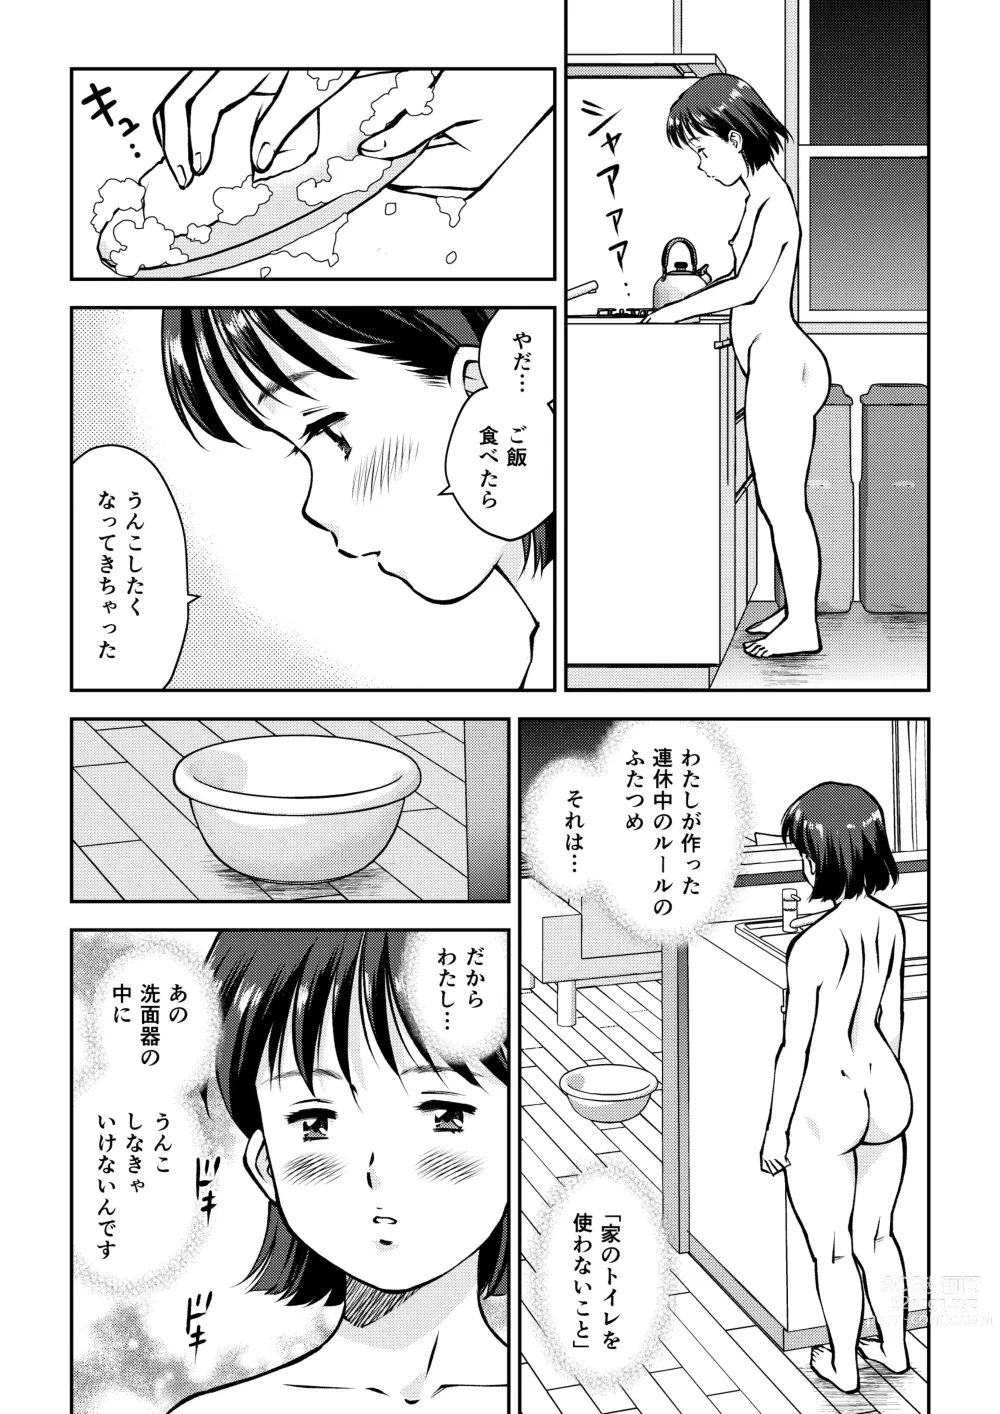 Page 9 of manga Unko Mamire de Orusuban